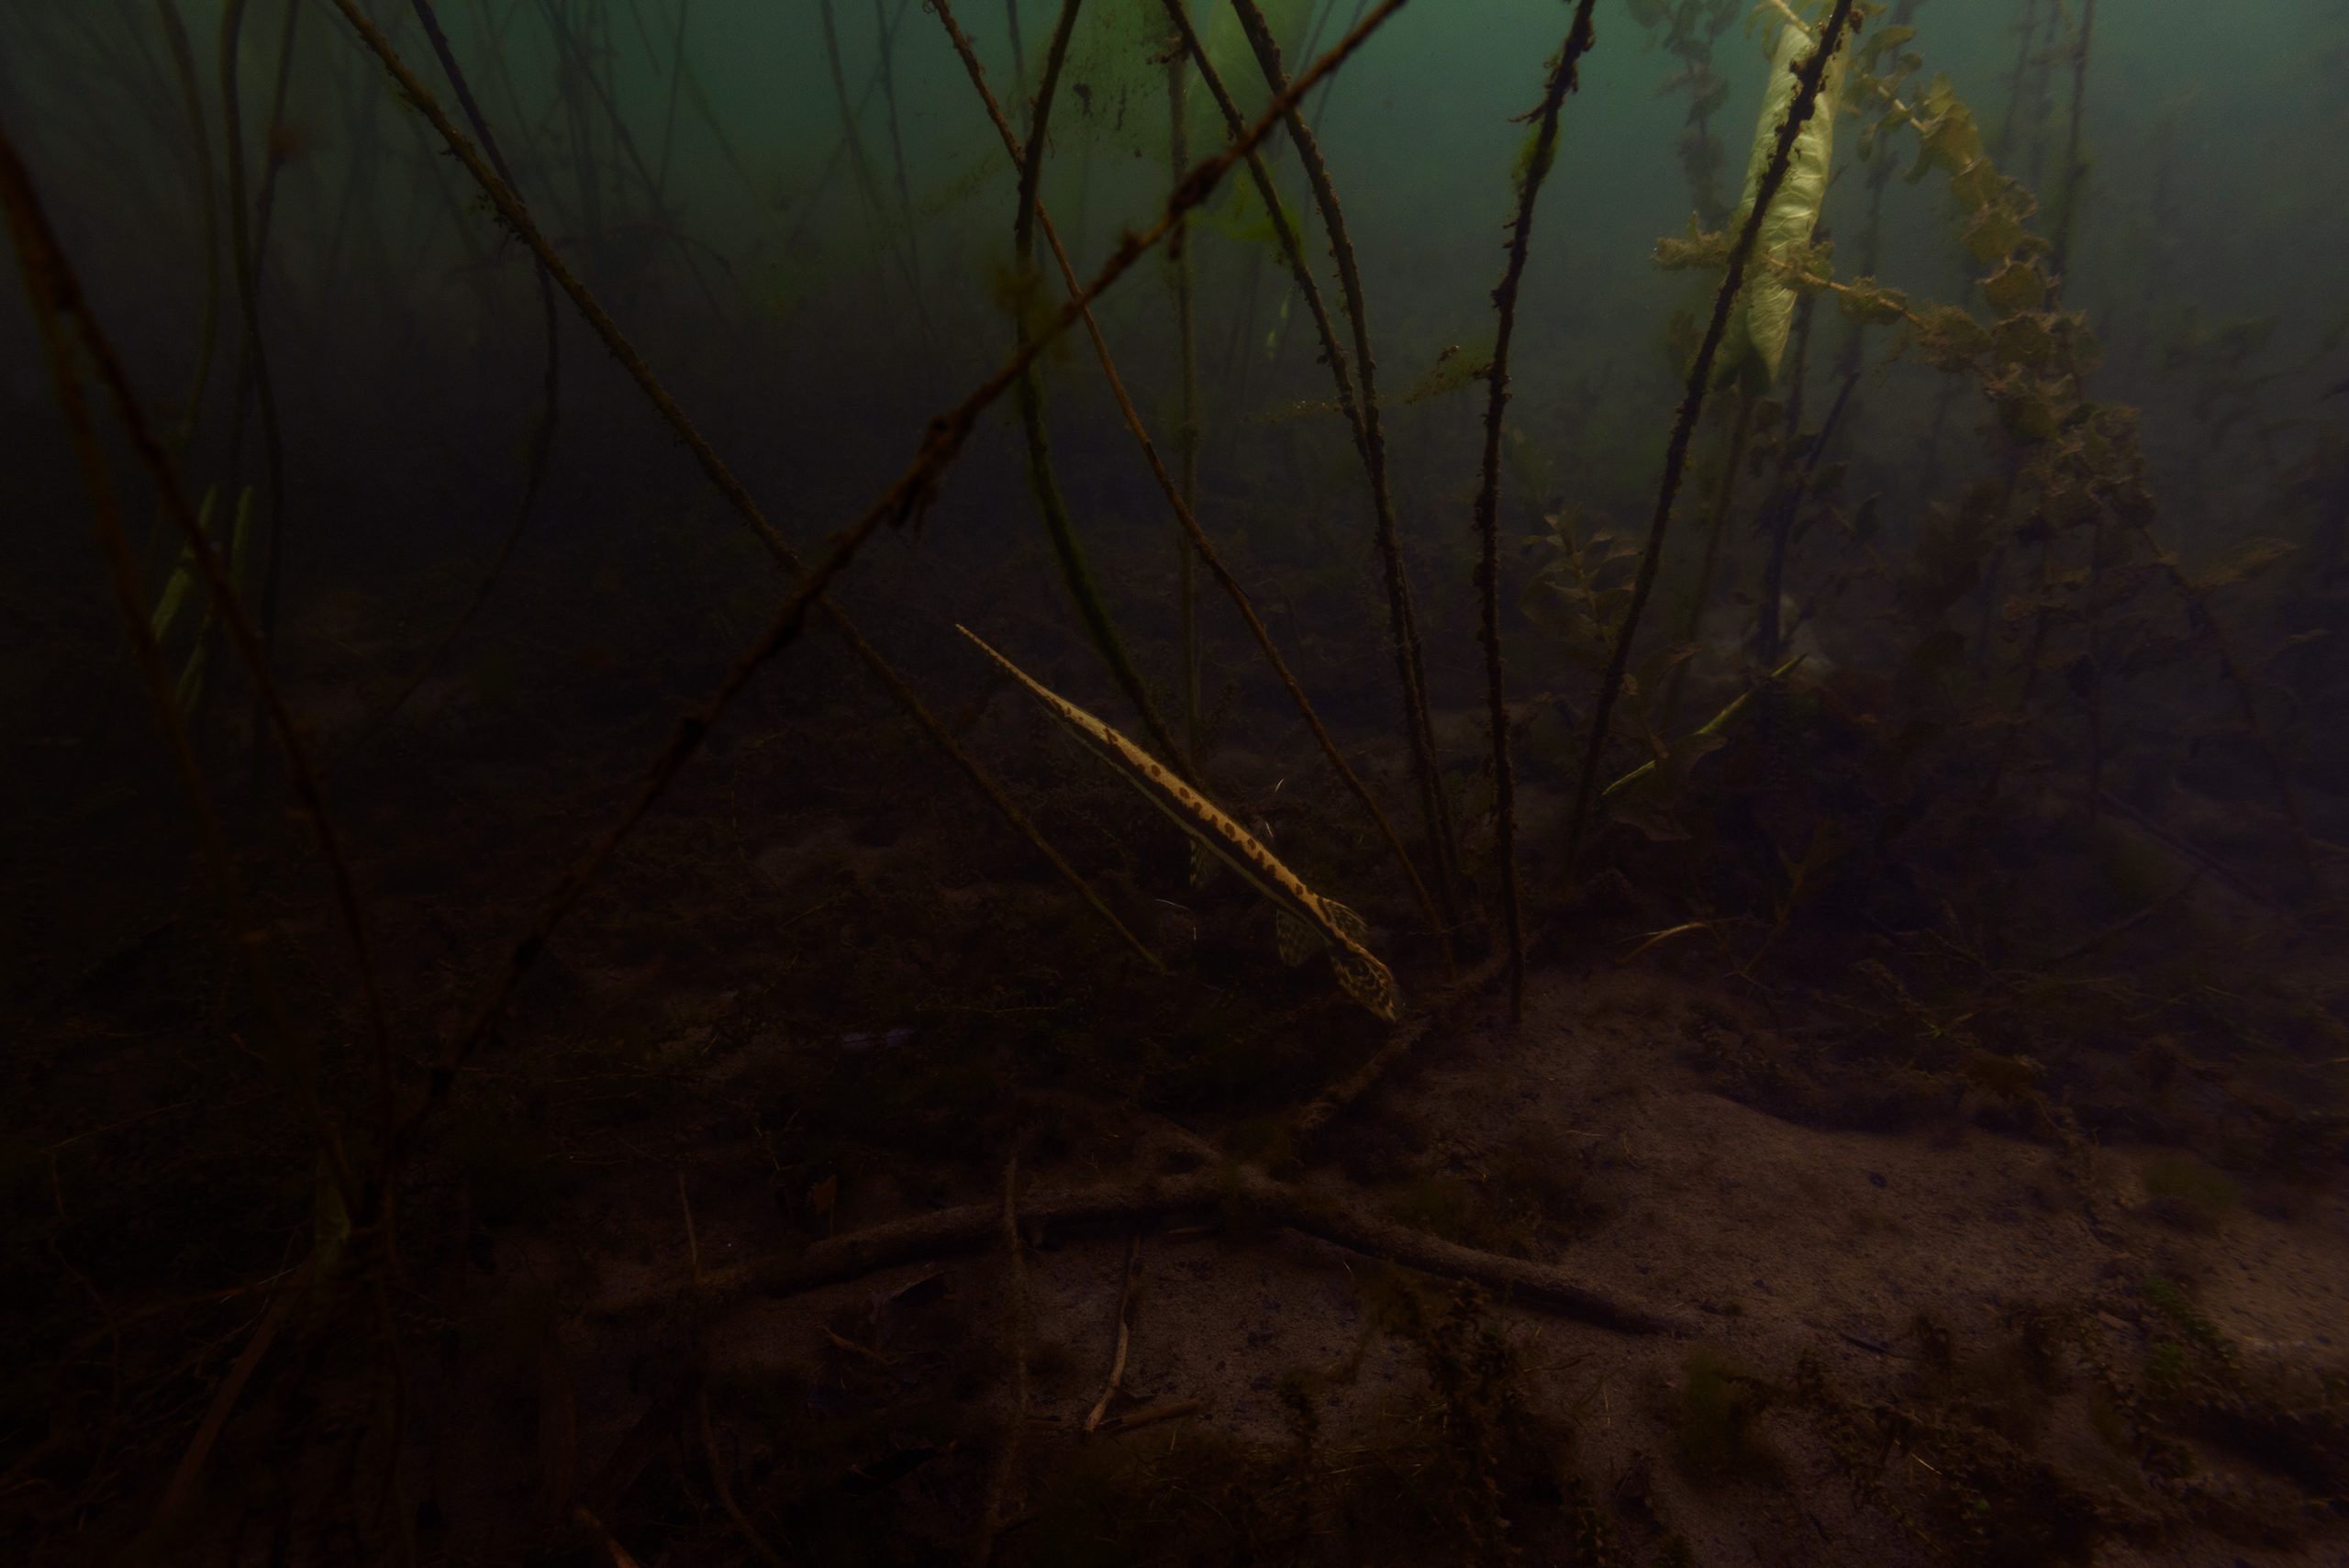 Underwater photo of sticks, soil, fish and seaweed.